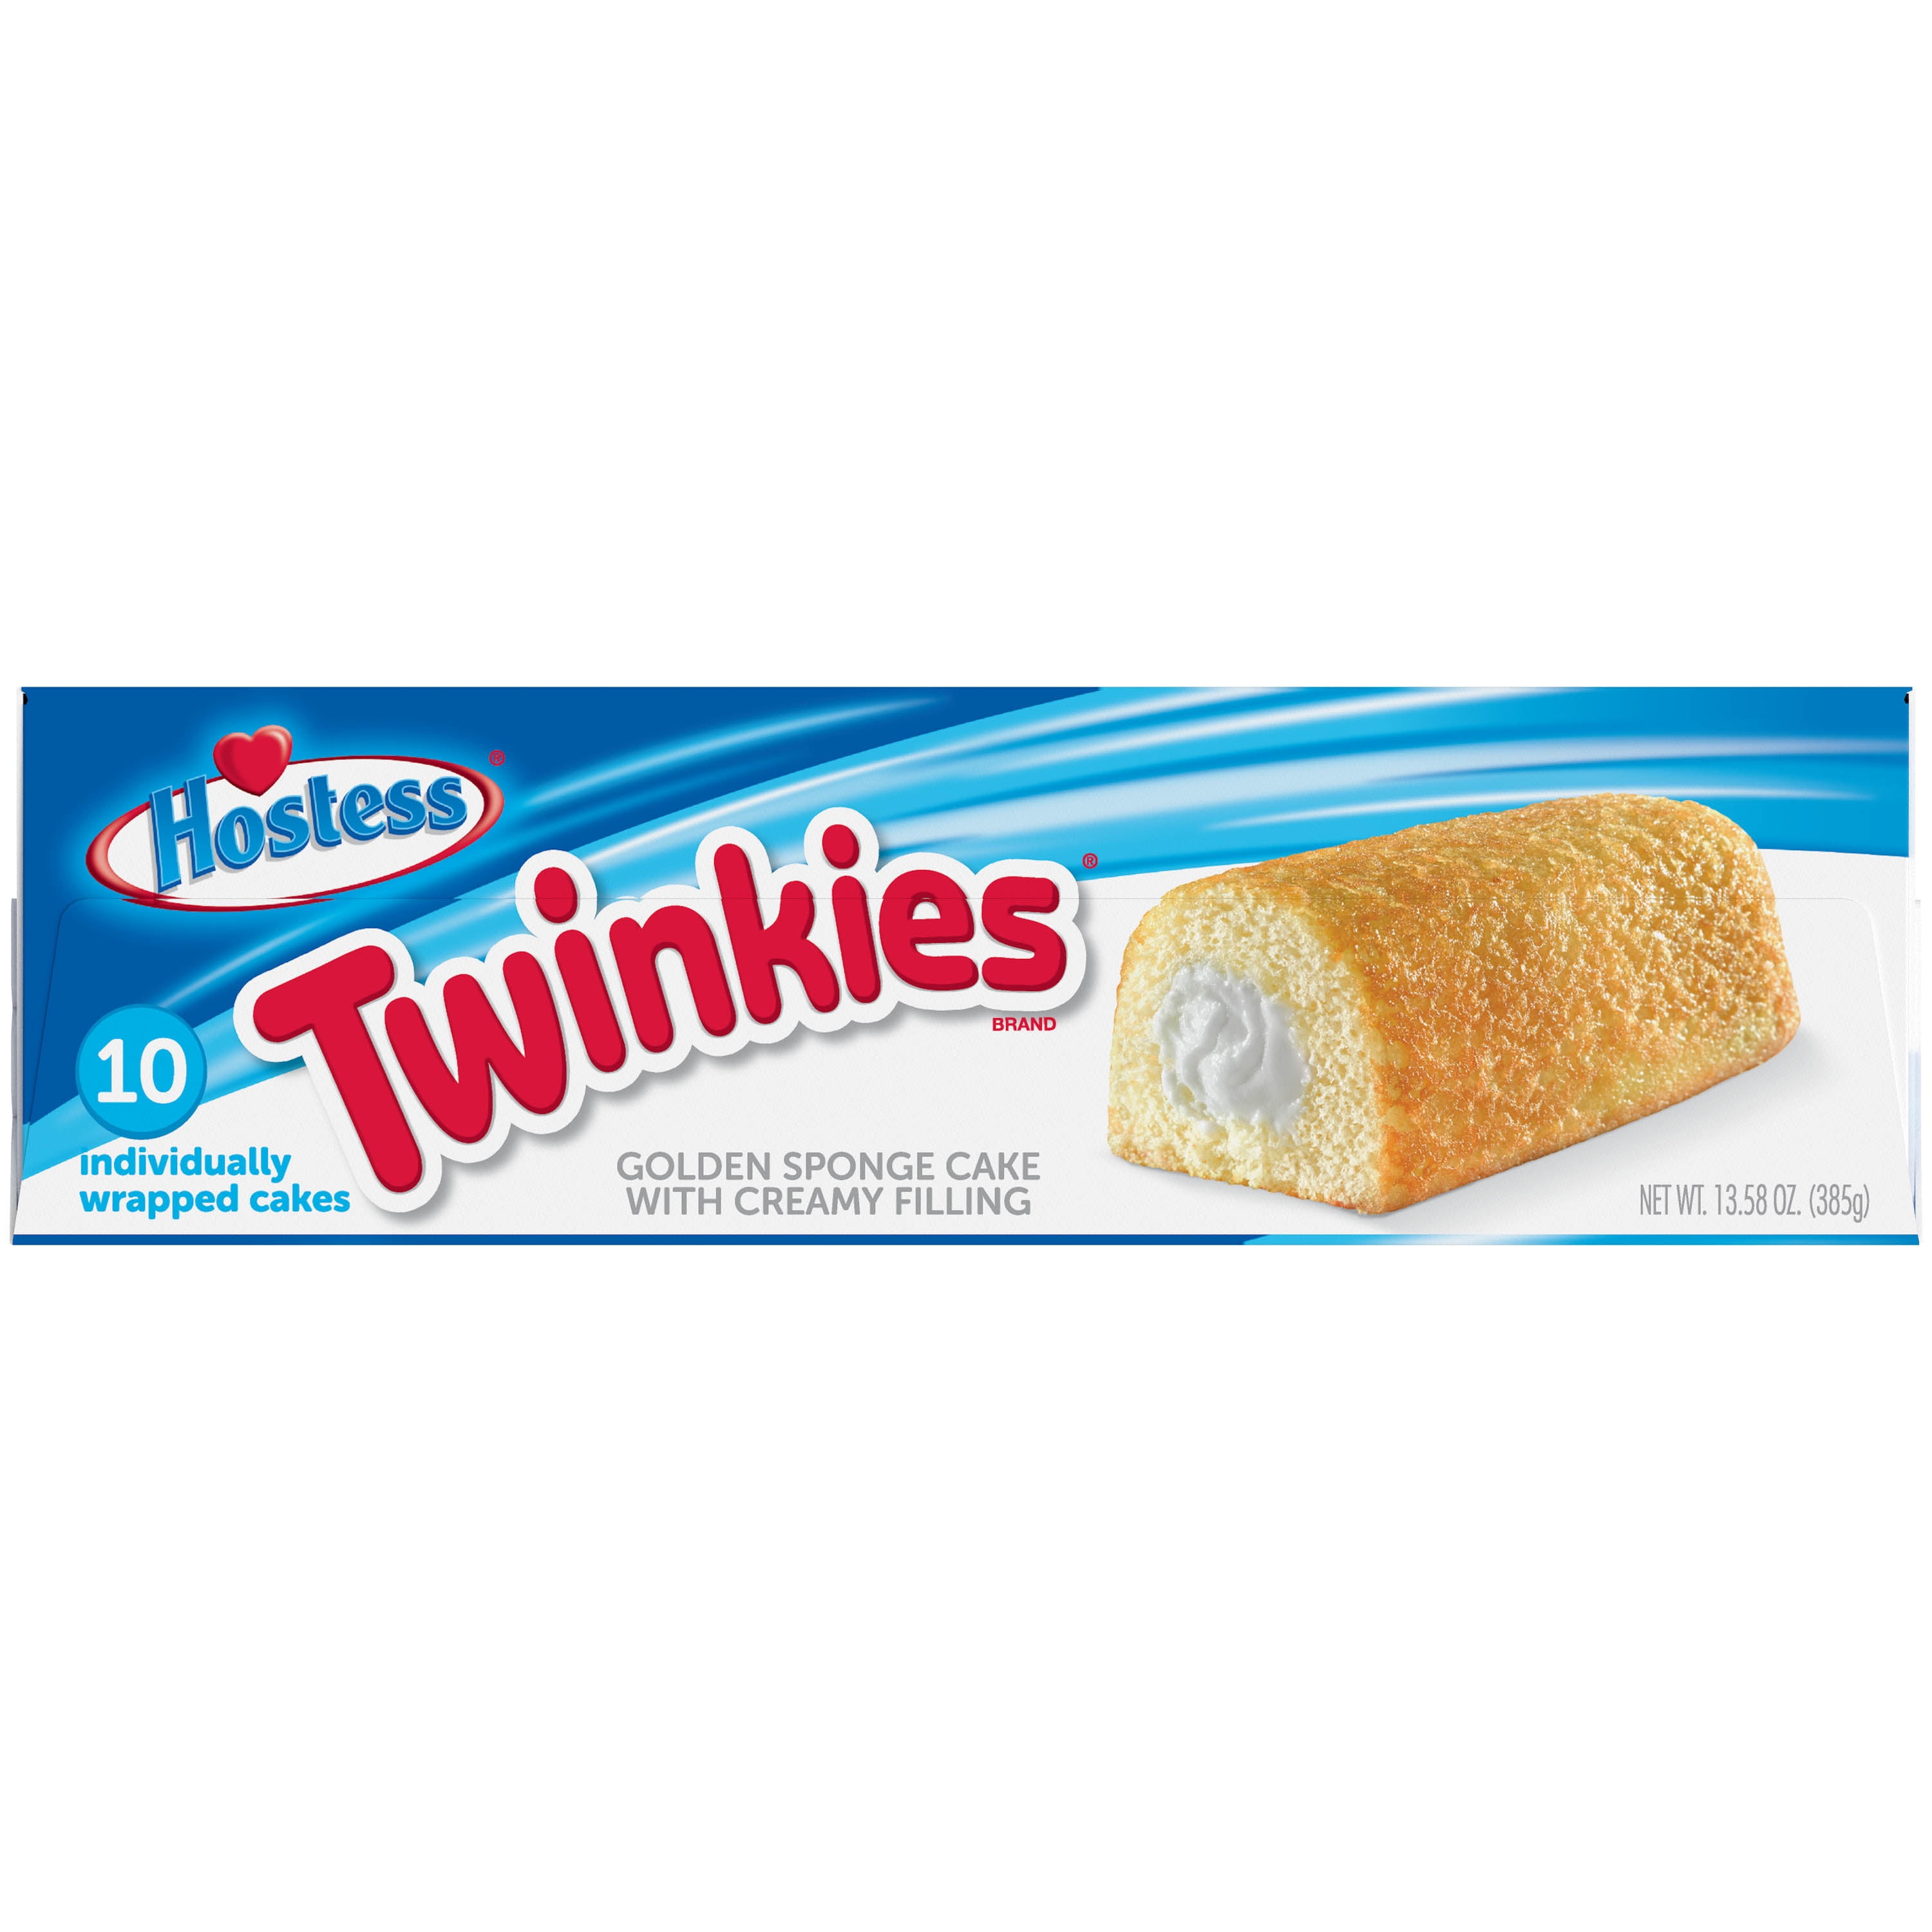 OMG Fo' Sqweezy Snack Cakes - Twinkies